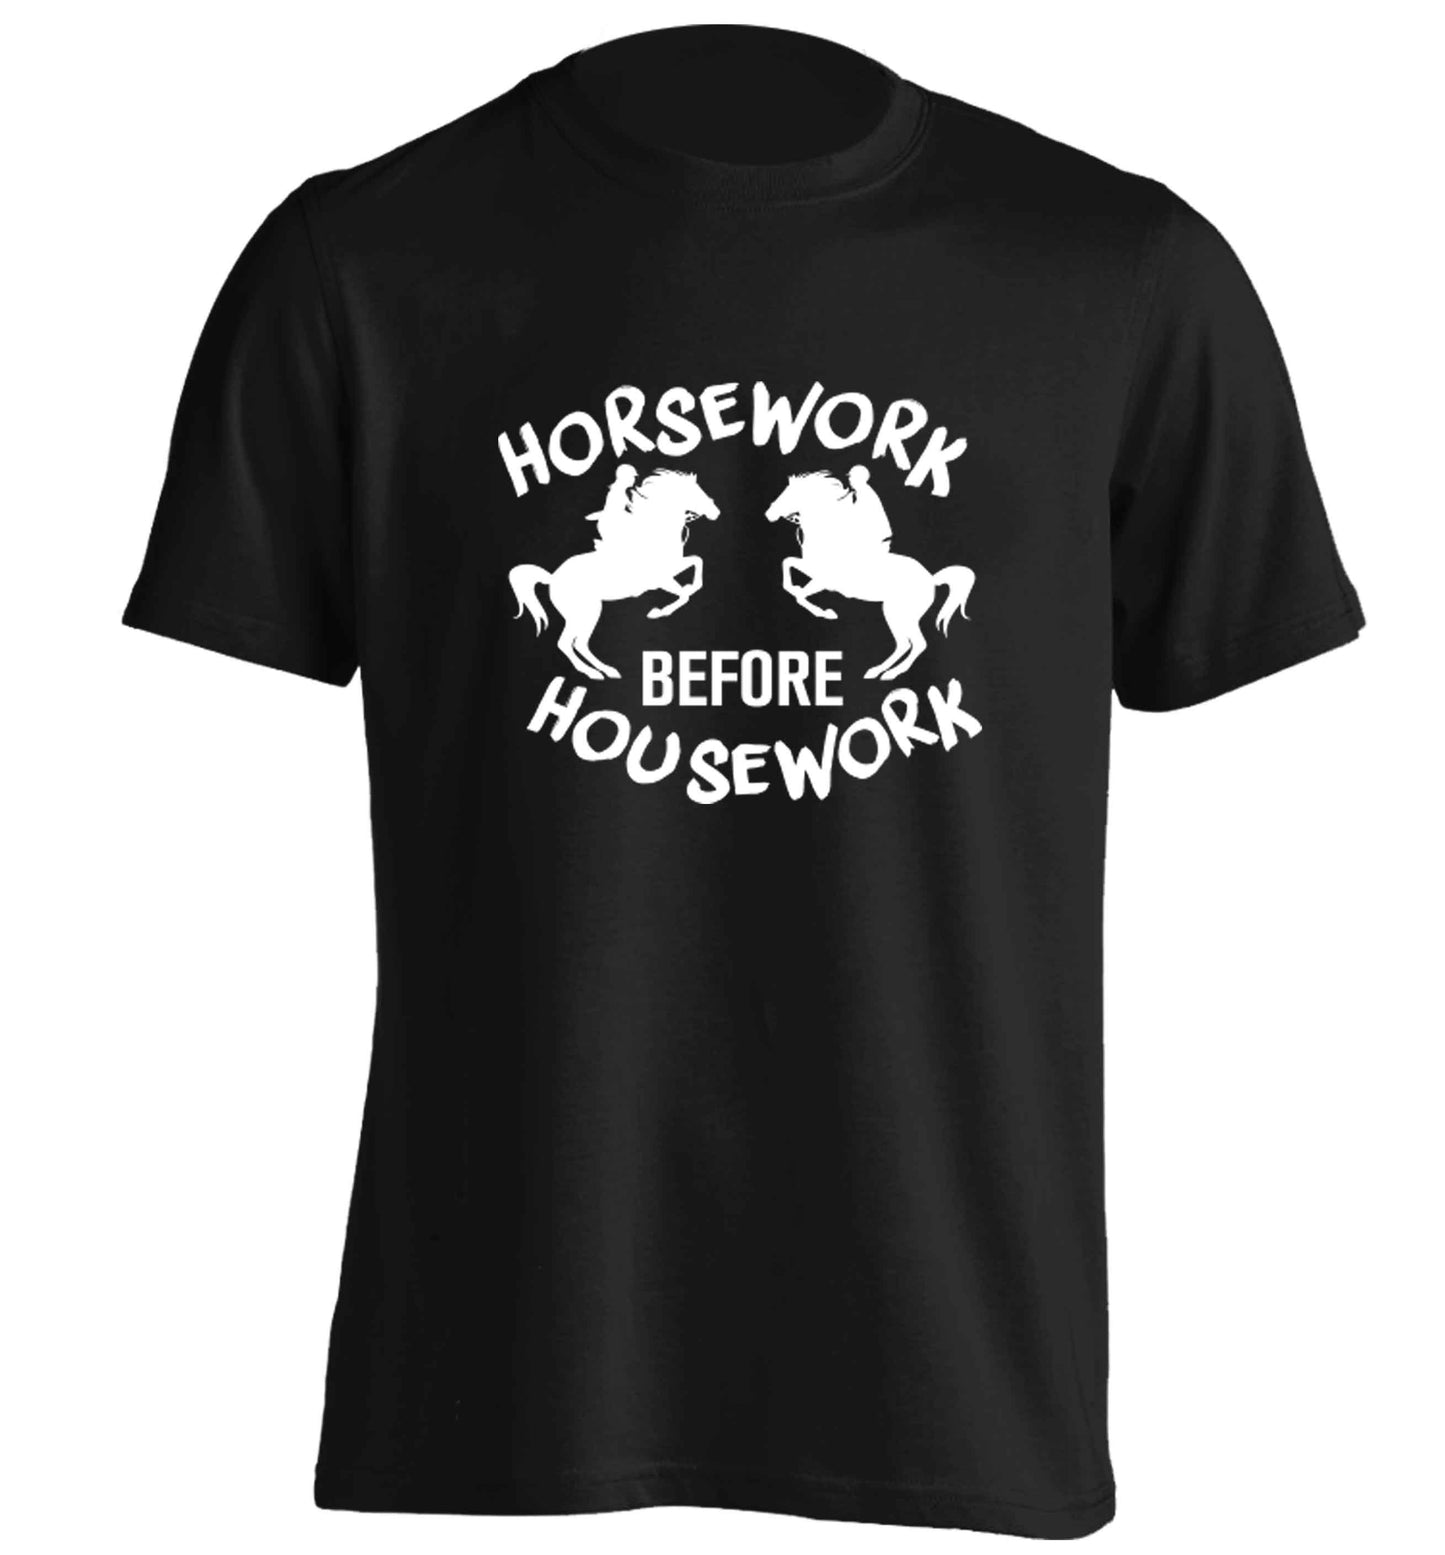 Horsework before housework adults unisex black Tshirt 2XL